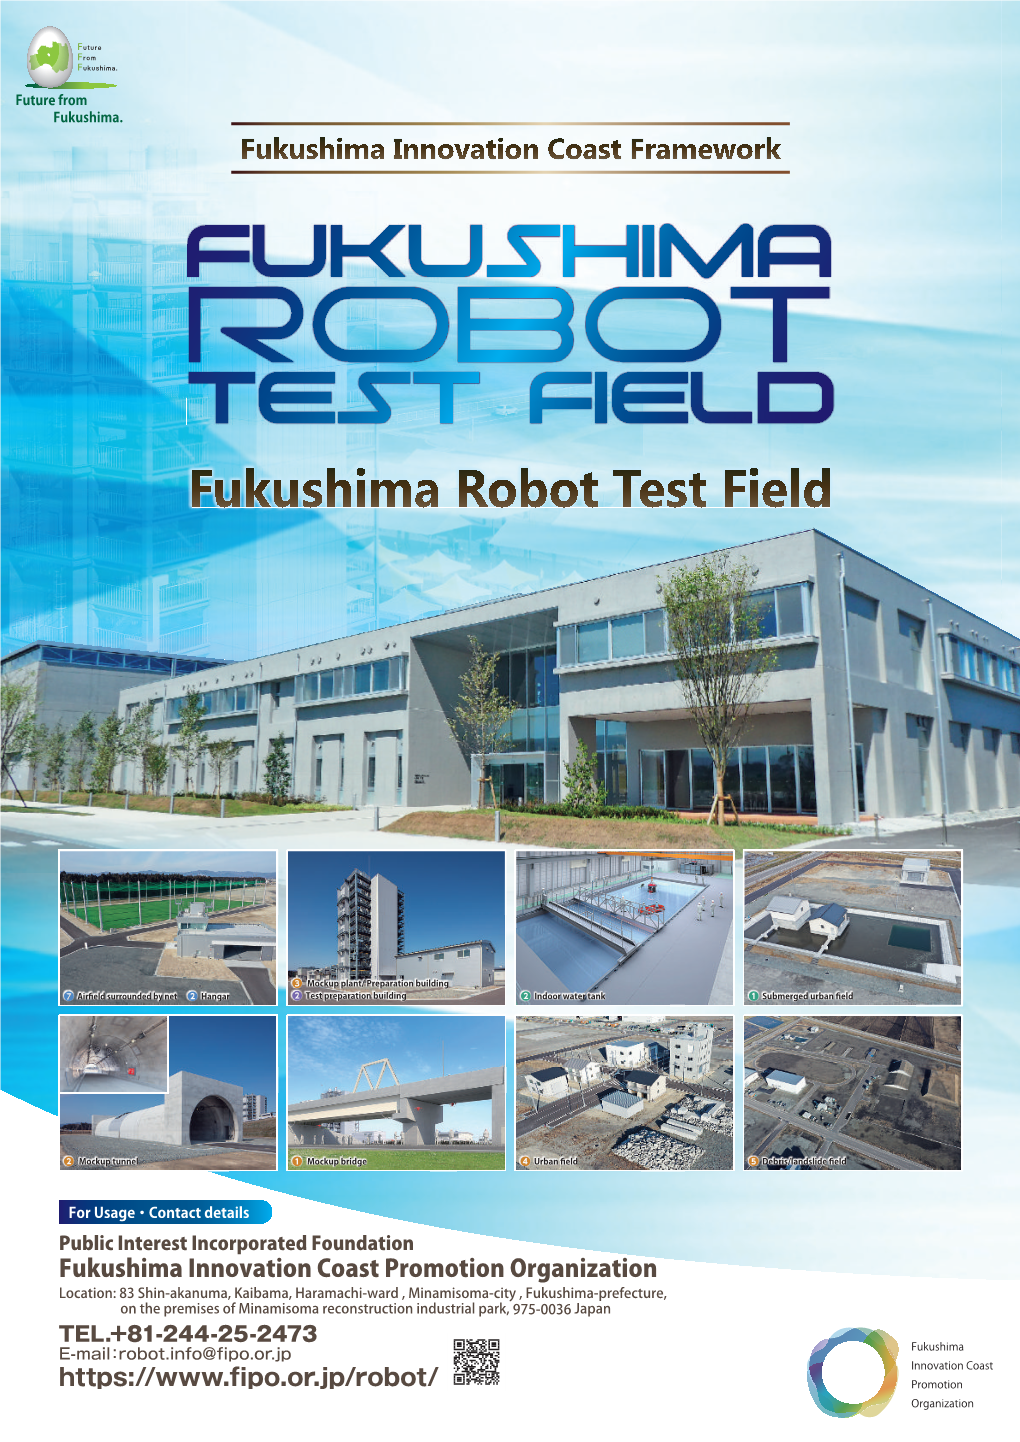 Fukushima Robot Test Field